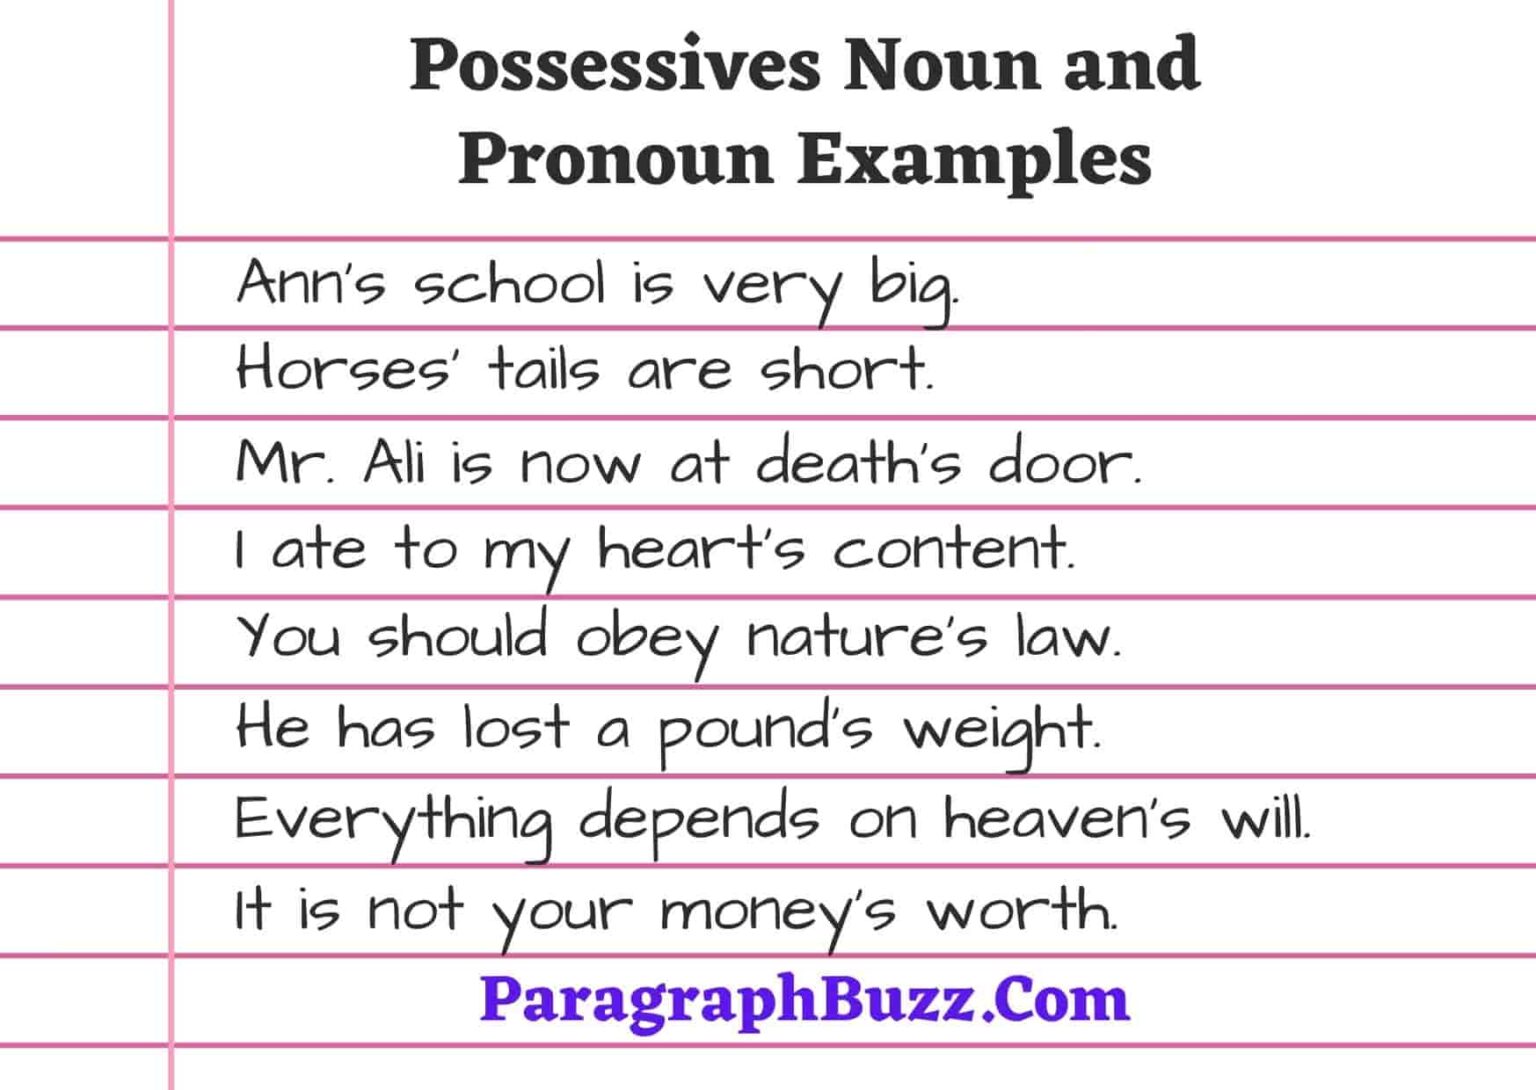 Short noun. Noun pronoun. But for Noun/pronoun примеры. Noun pronoun example. Sentences for possessive pronouns.